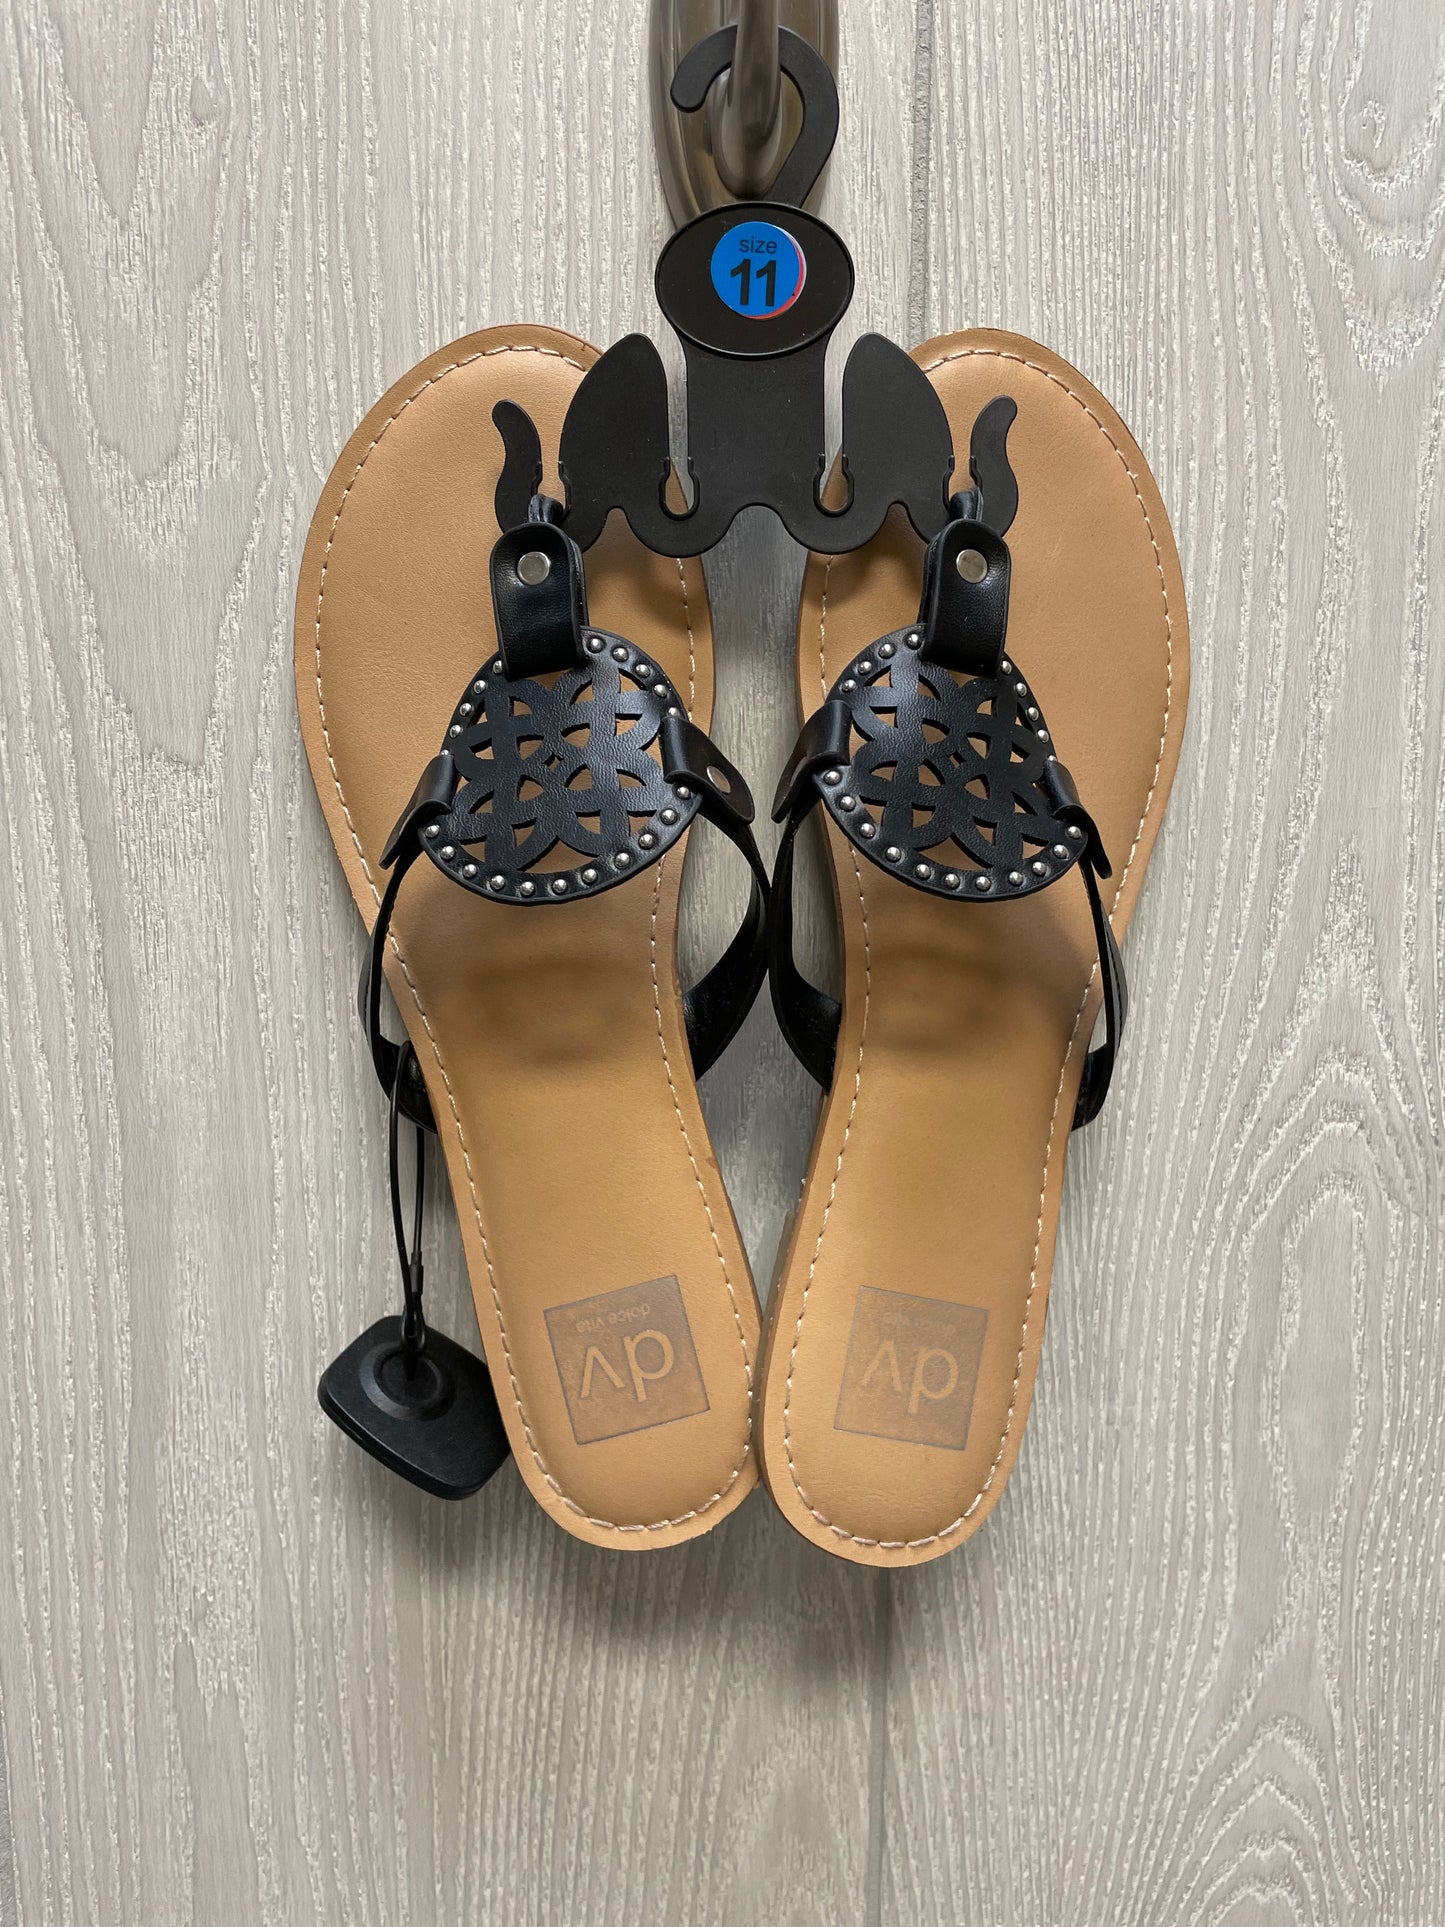 Black & Tan Sandals Flats Dolce Vita, Size 11